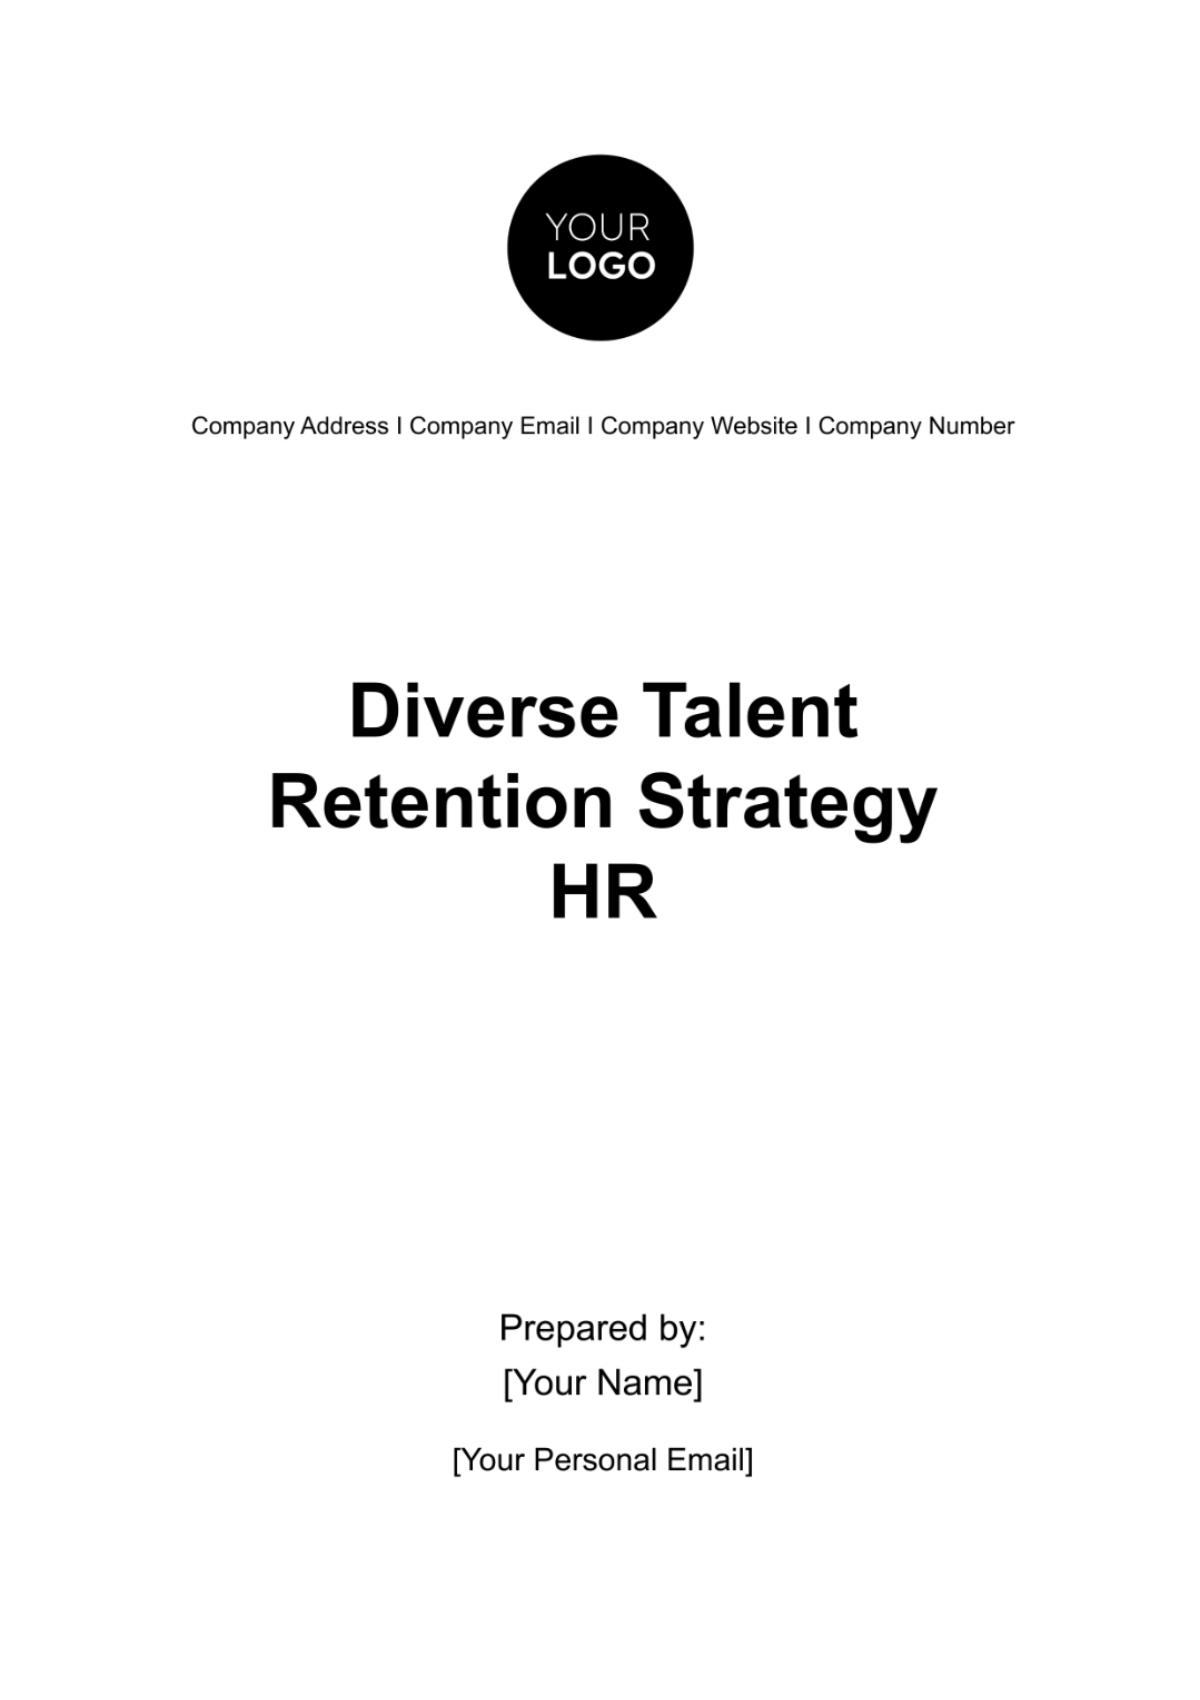 Diverse Talent Retention Strategy HR Template